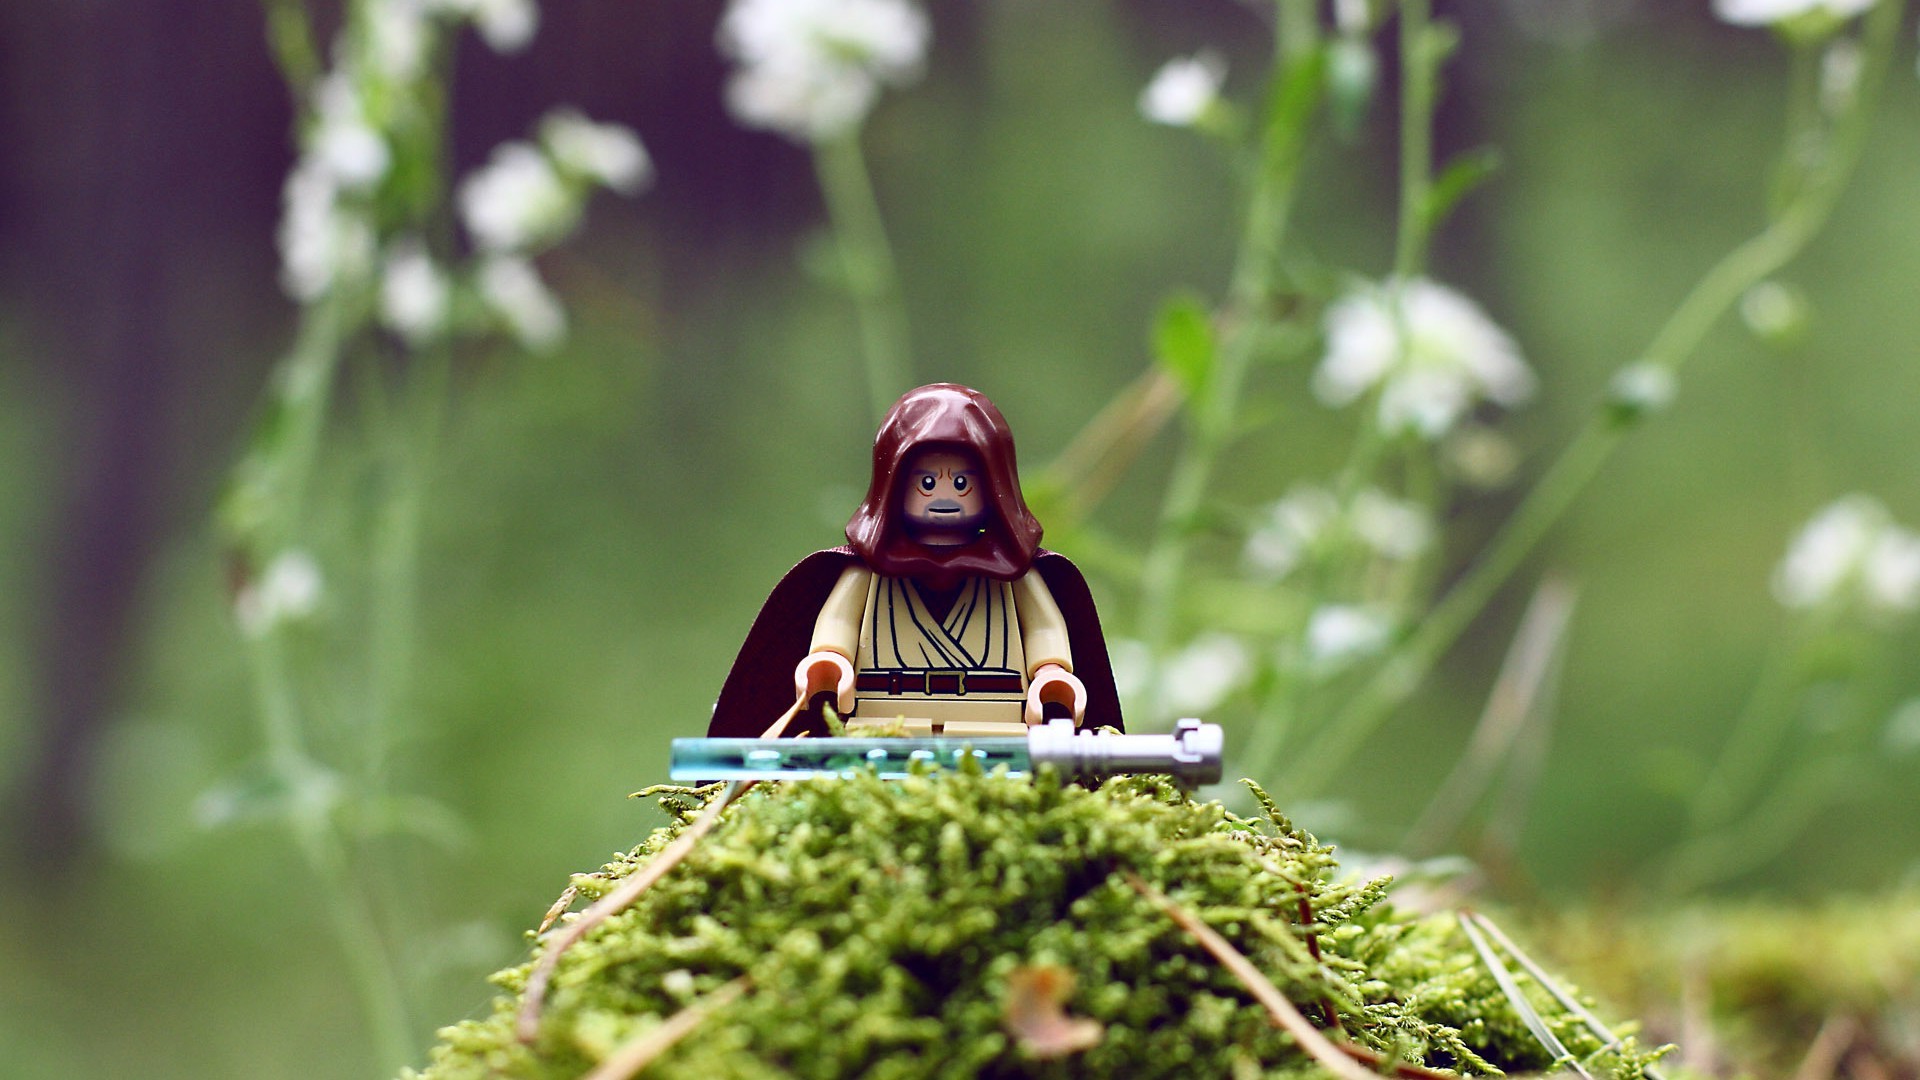 Lego Star Wars Pictures  Download Free Images on Unsplash